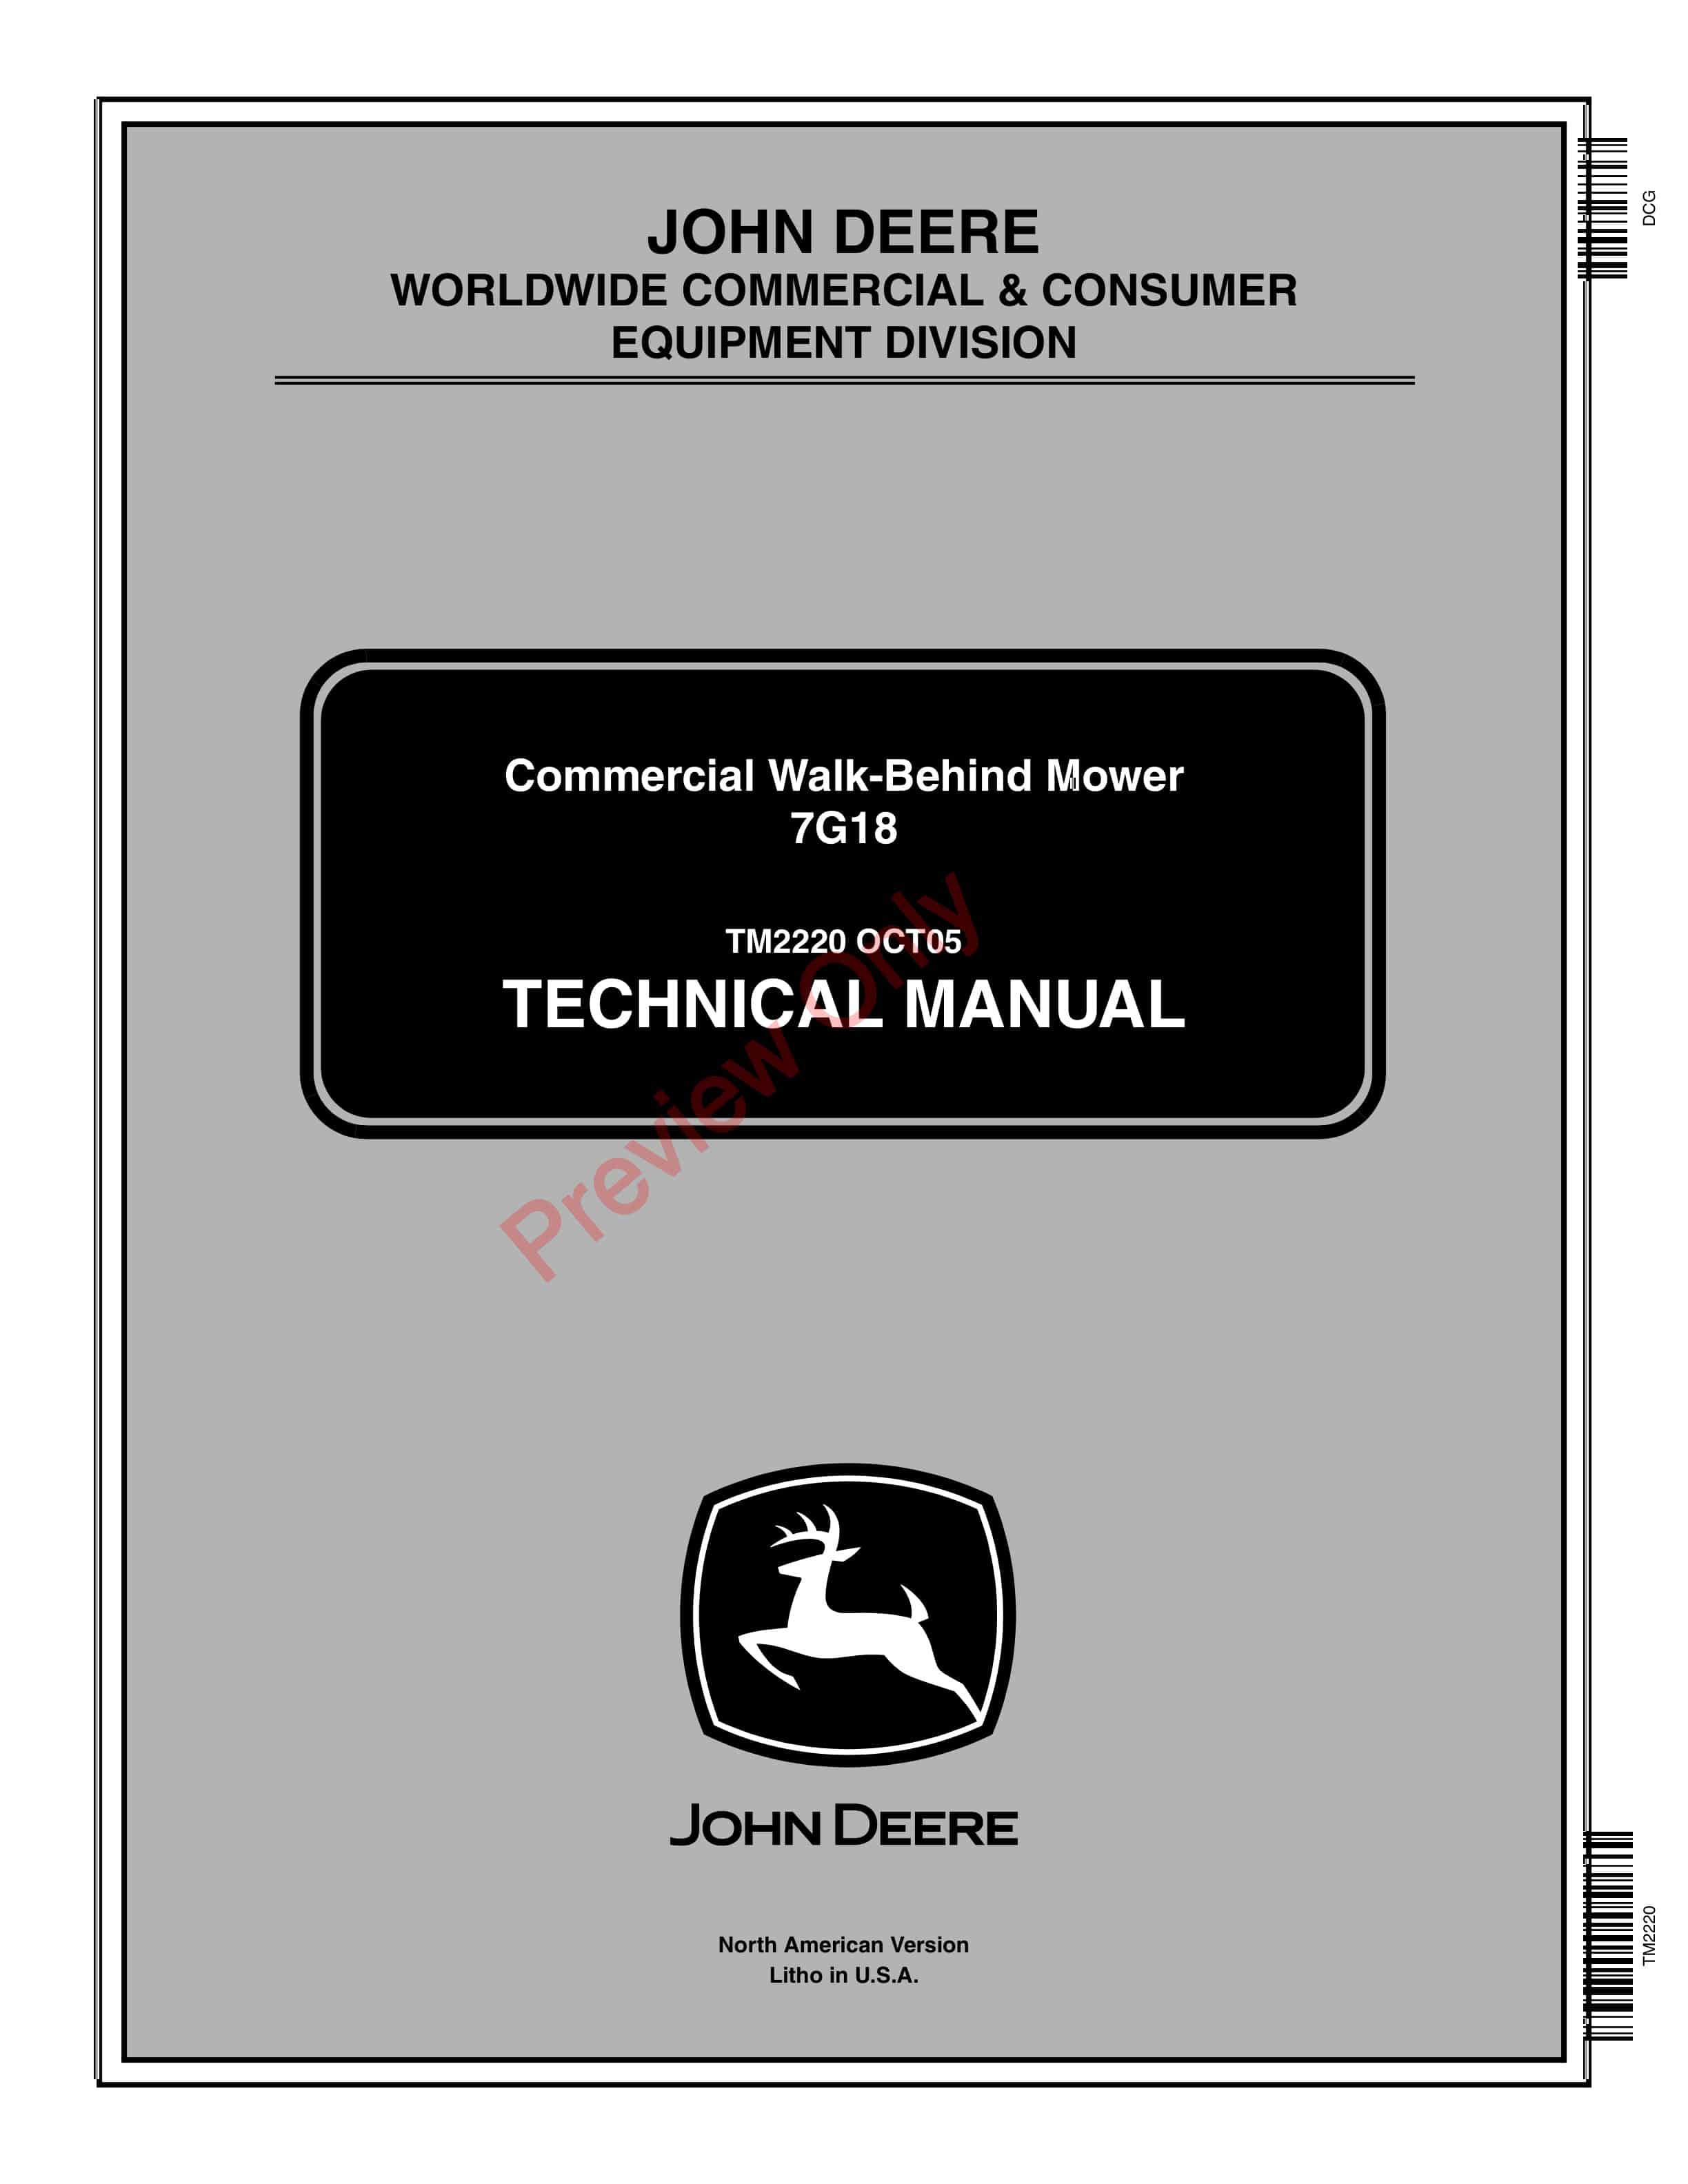 John Deere 7G18 Commercial Walk Behind Mower Technical Manual TM2220 01OCT05 1